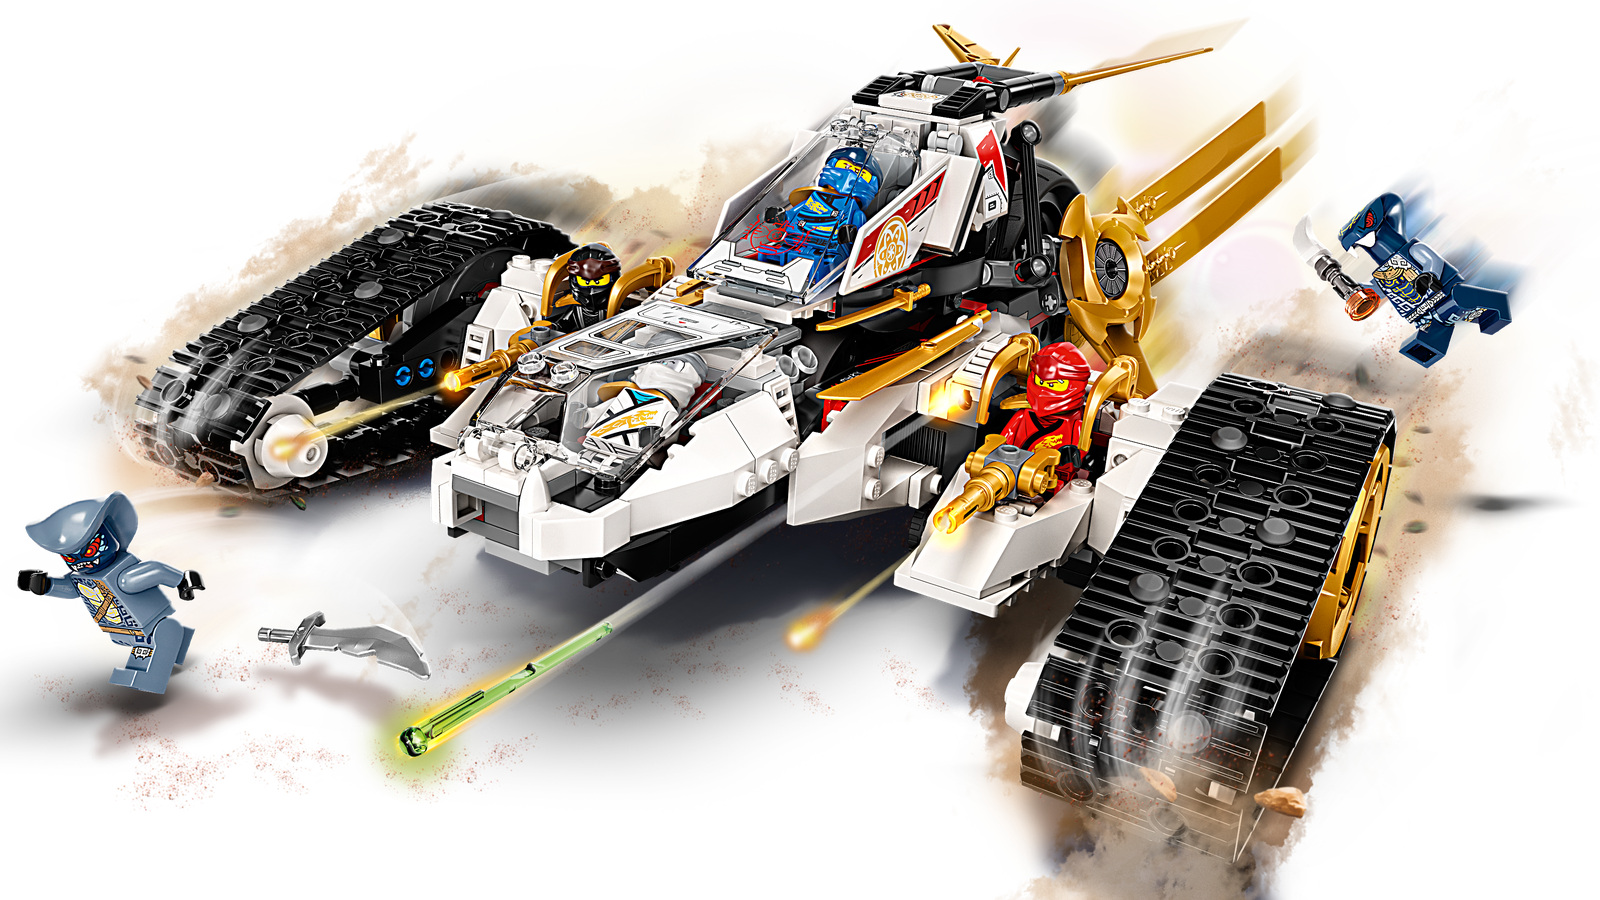 Lego Ninjago Ultra Sonic Raider 71739